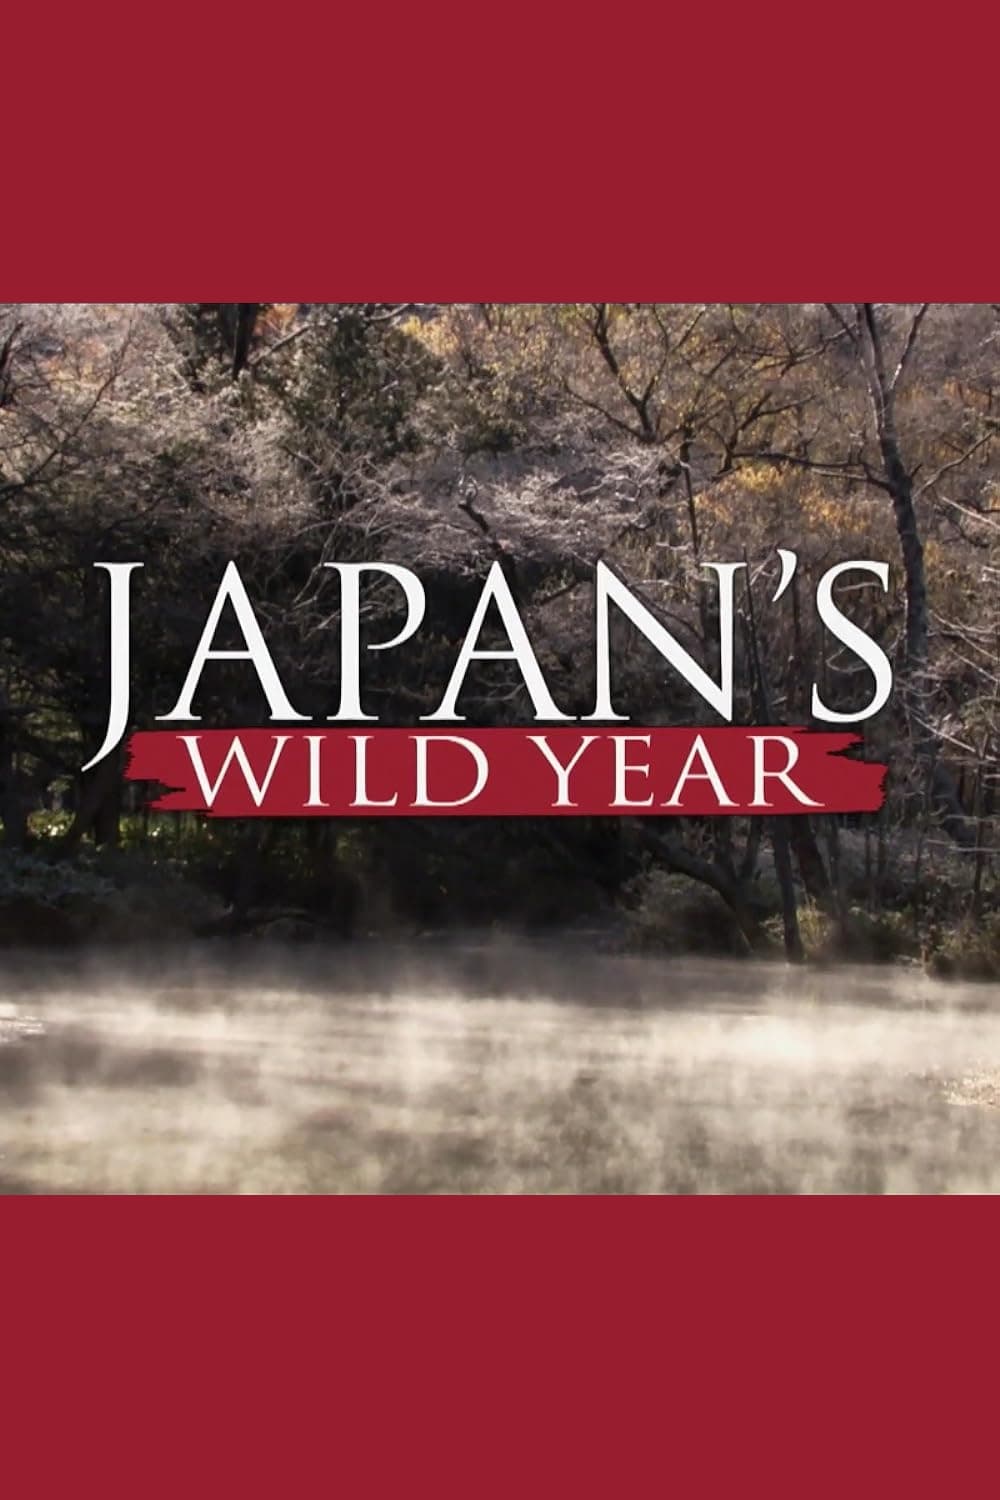 Japan's Wild Year